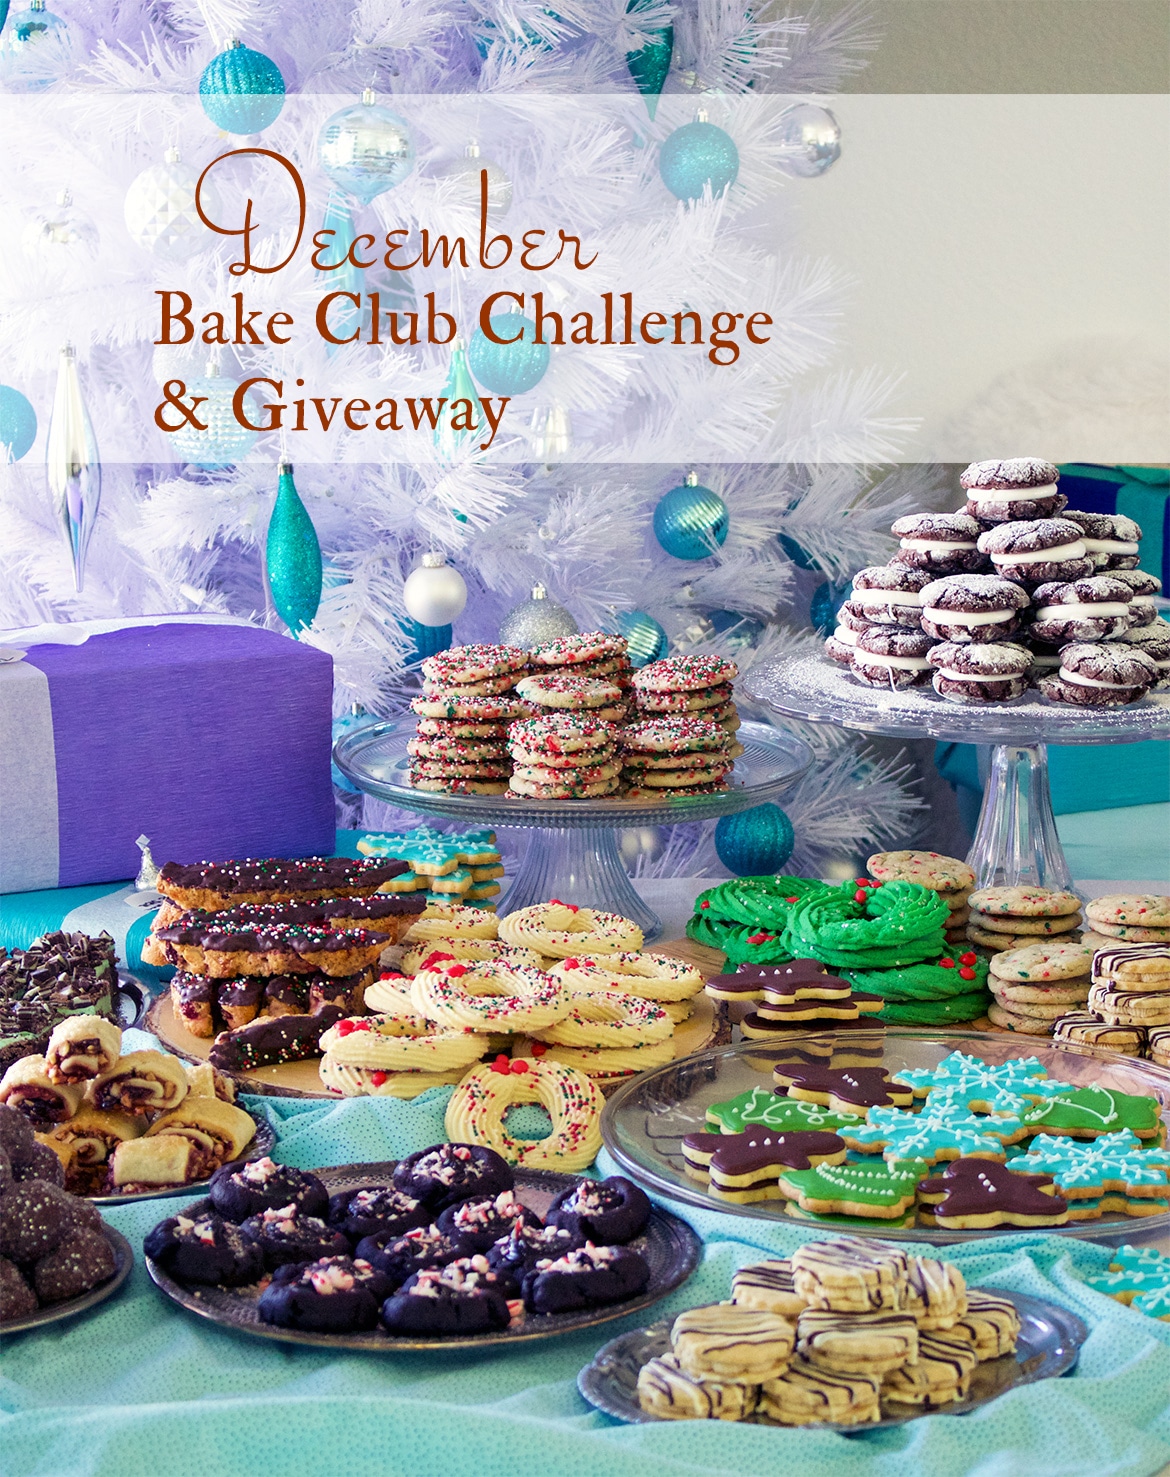 The December Bake Club Baking Challenge Recipe is Christmas Cookies